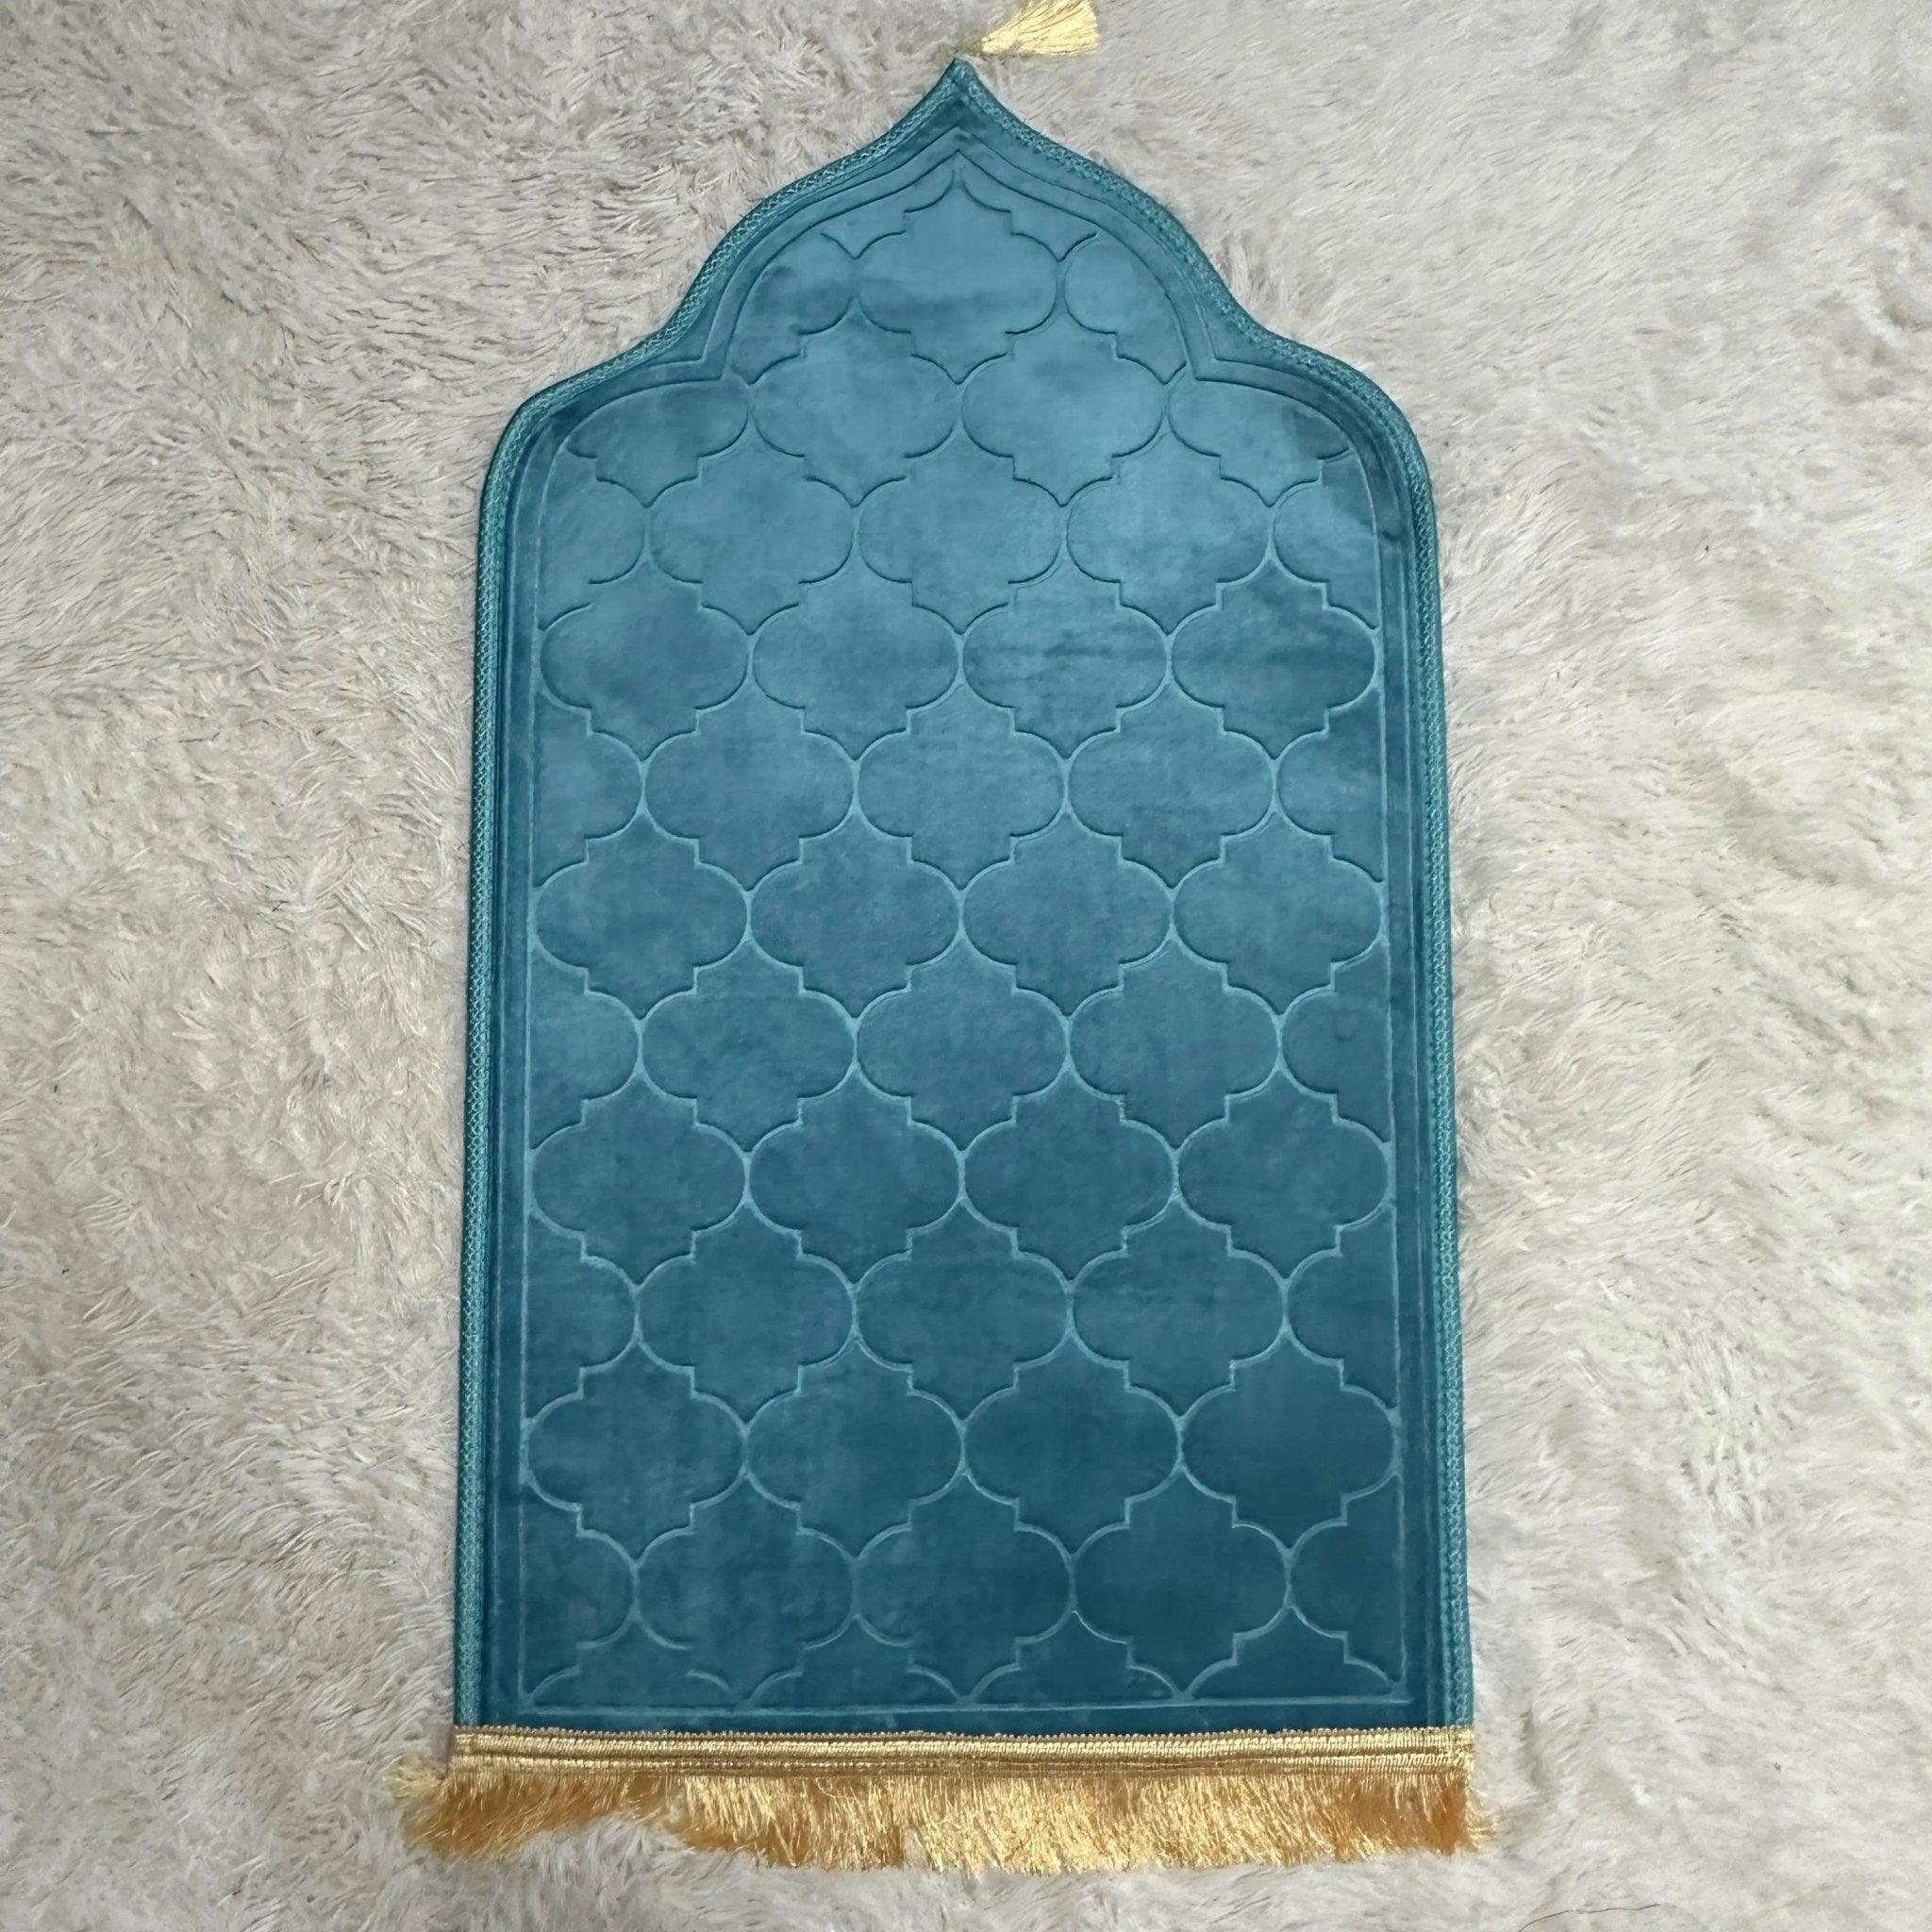 MC010 Soft Flannel Prayer Mat - Mariam's Collection